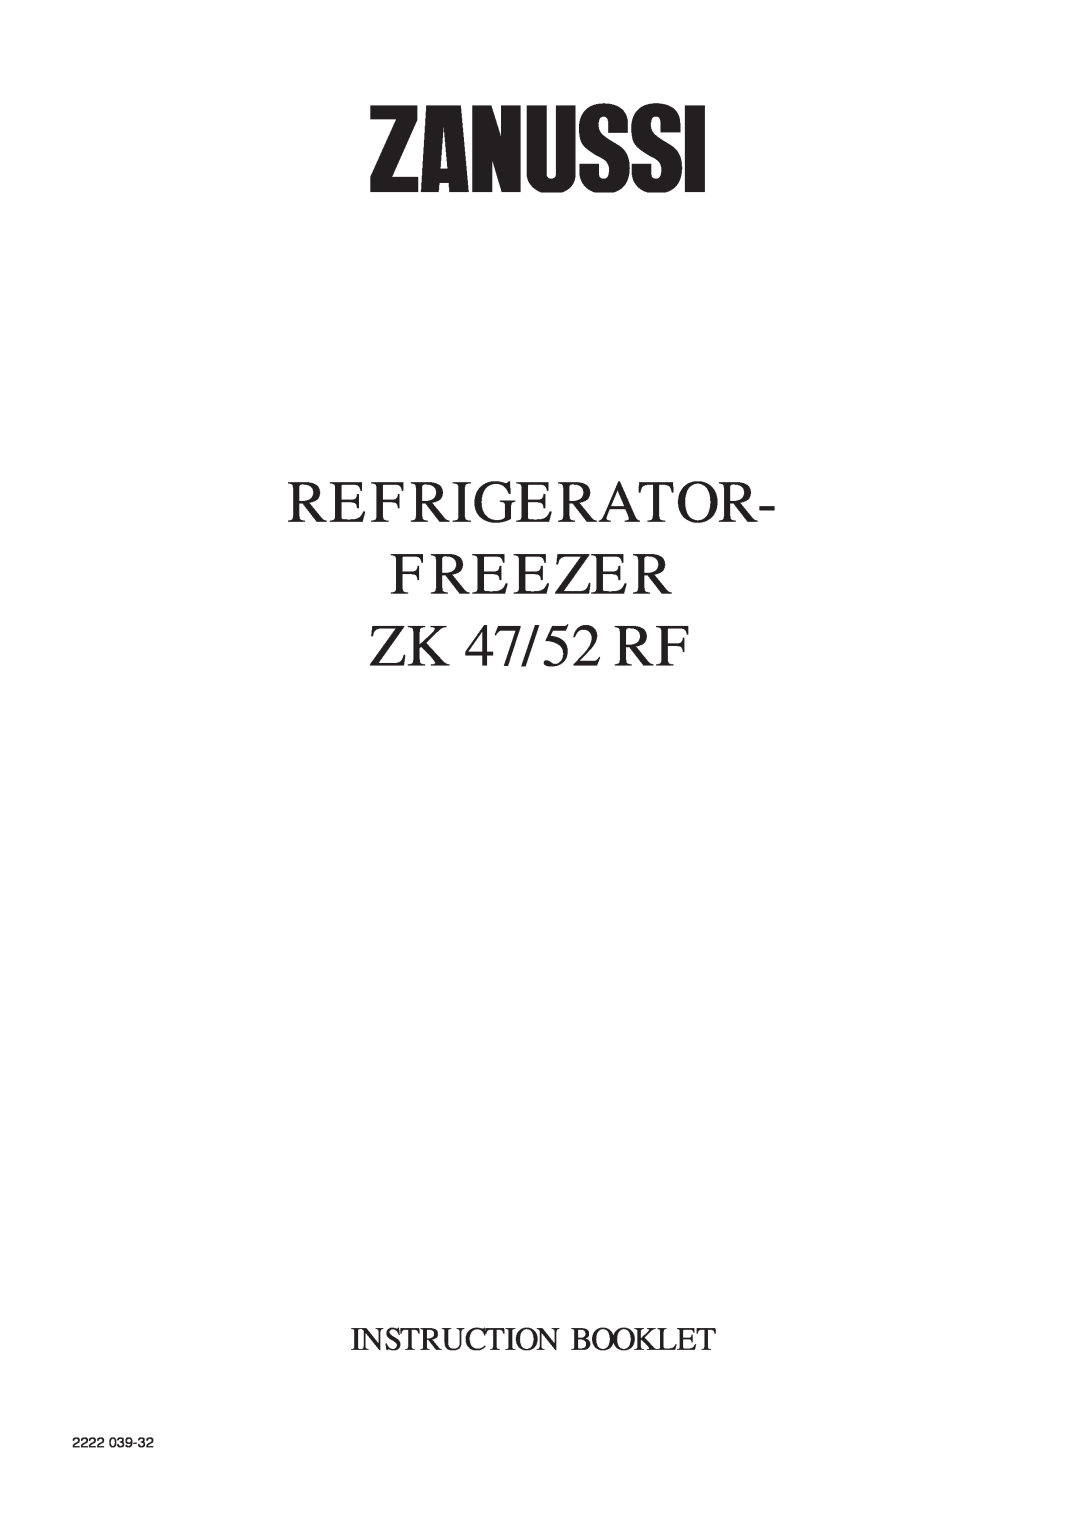 Zanussi manual REFRIGERATOR FREEZER ZK 47/52 RF, Instruction Booklet, 2222 